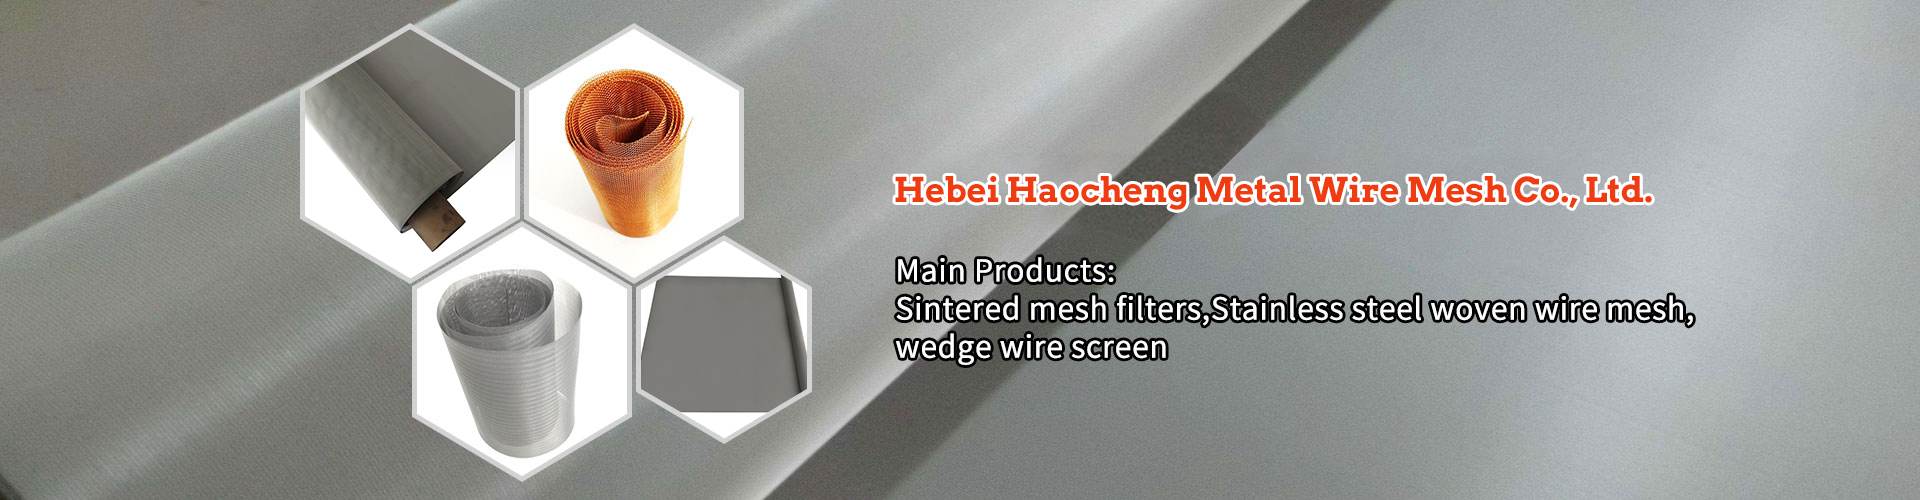 Hebei Haocheng Metal Wire Mesh Co., Ltd